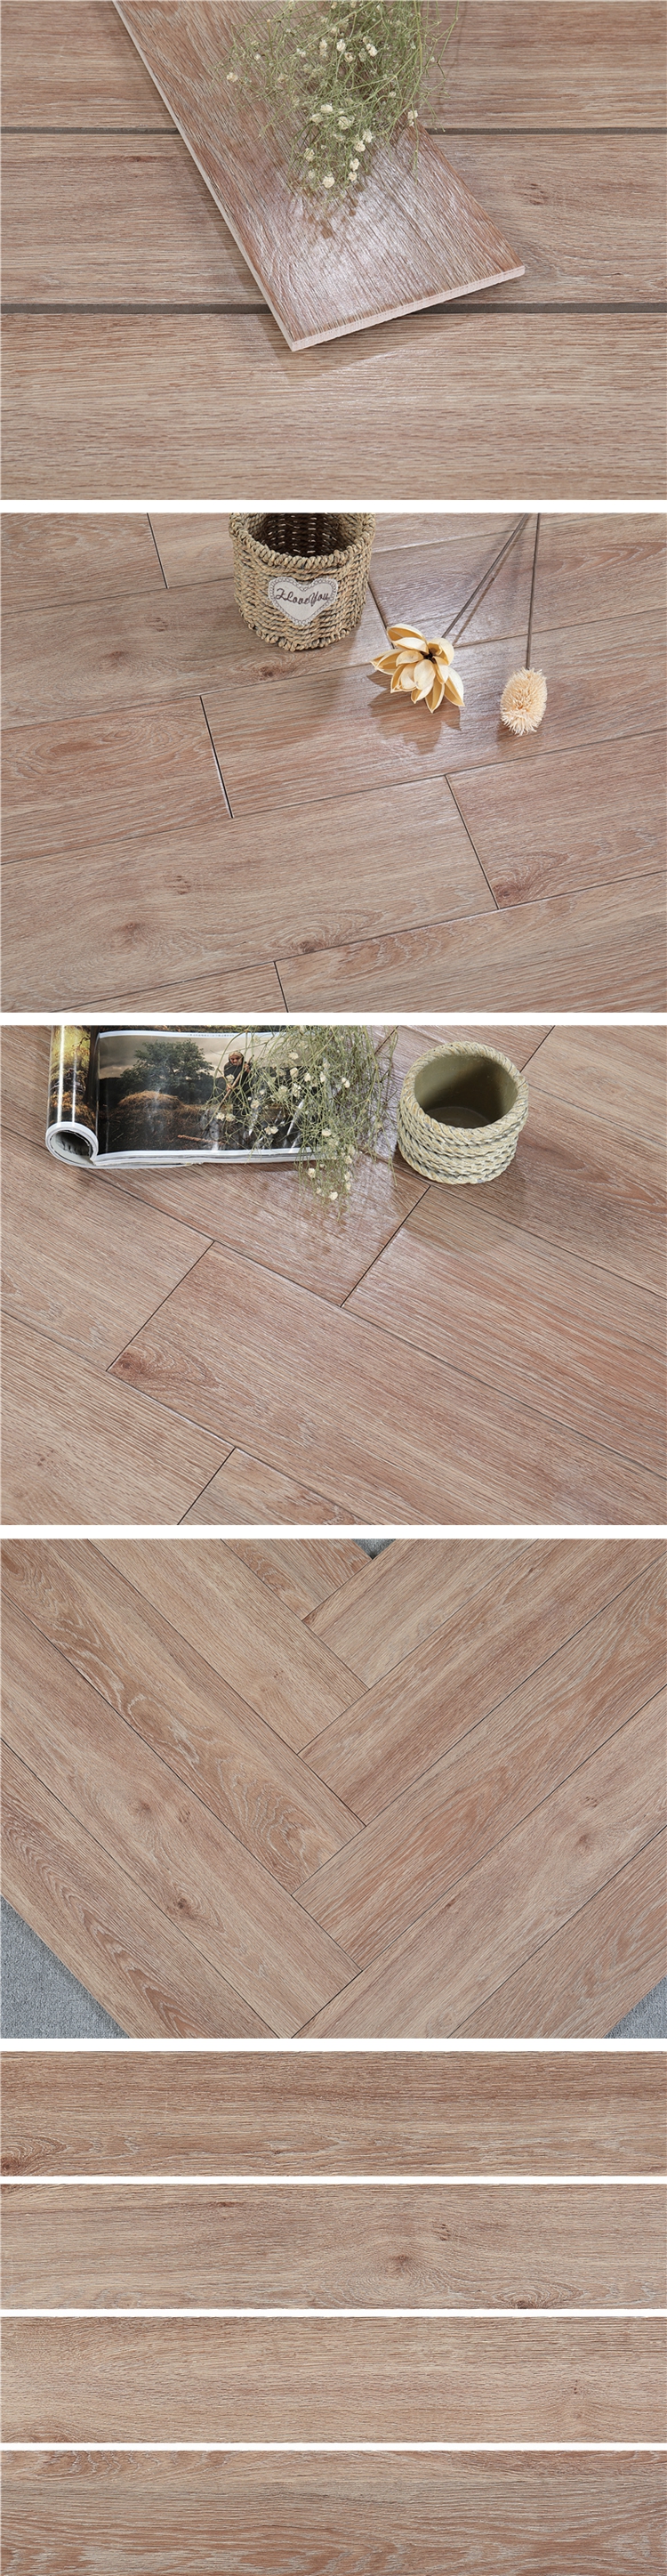 woodgrain floor tiles 7.jpg